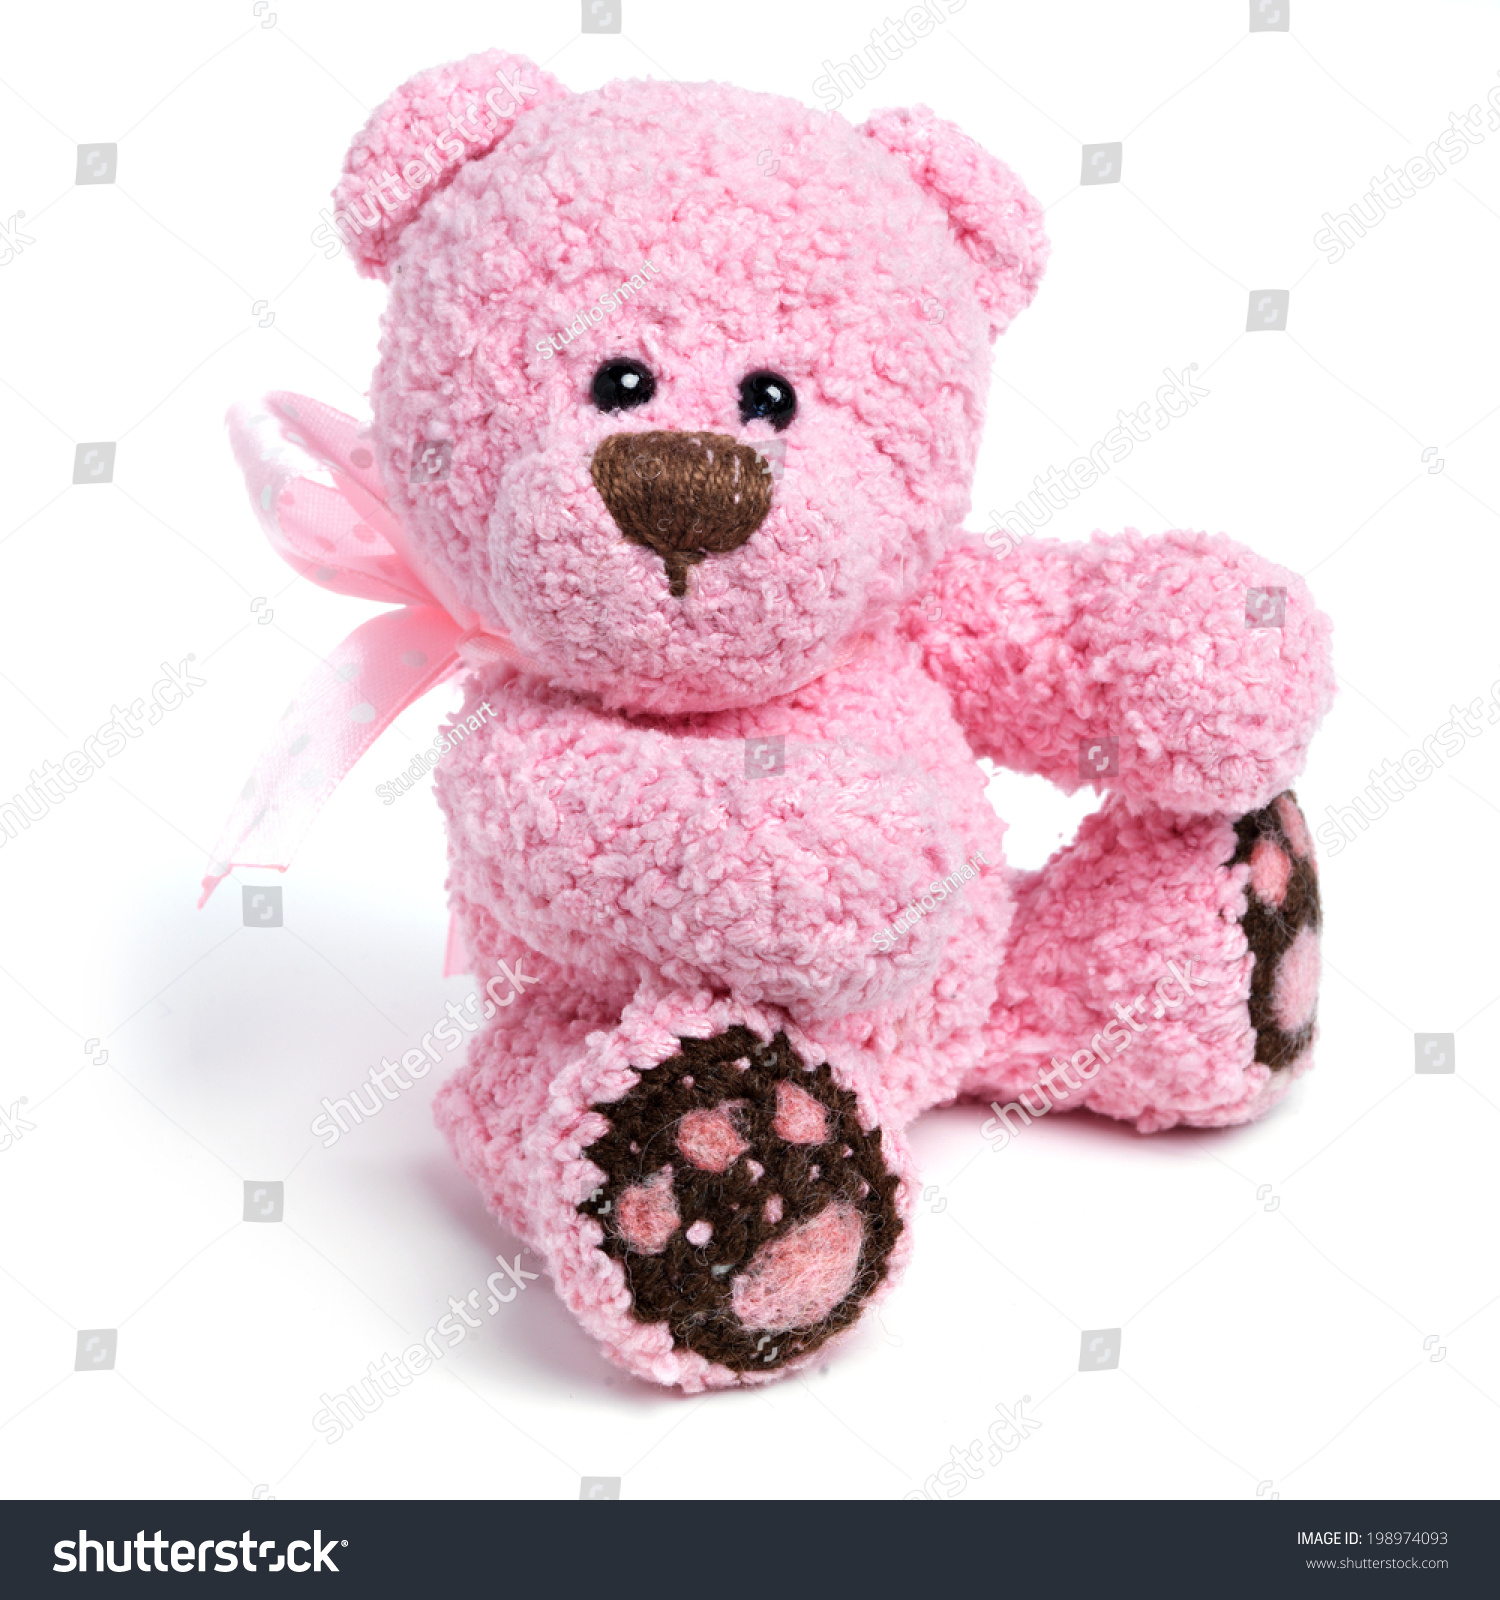 Classic Teddy Bear Stock Photo (Royalty Free) 198974093 - Shutterstock